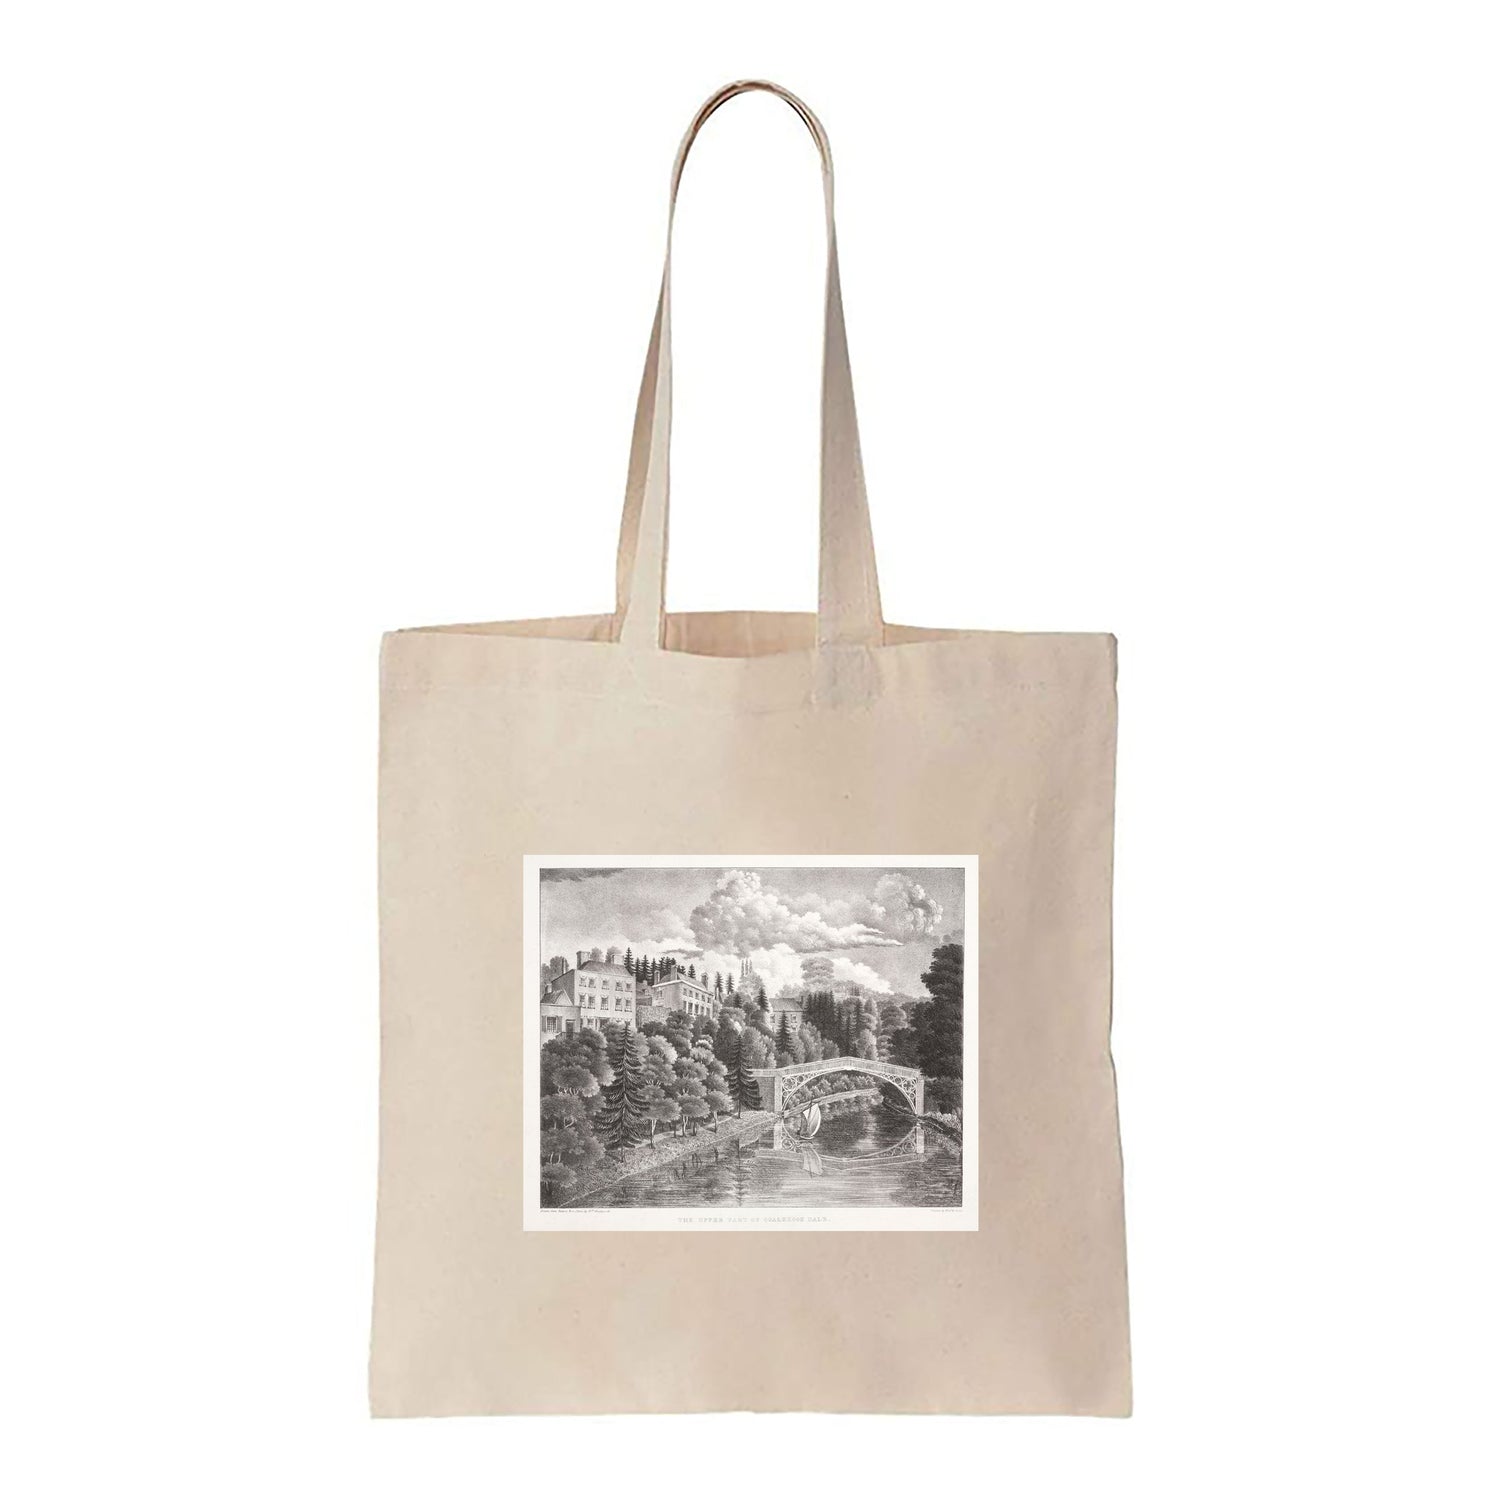 Coalbrook Dale - Canvas Tote Bag